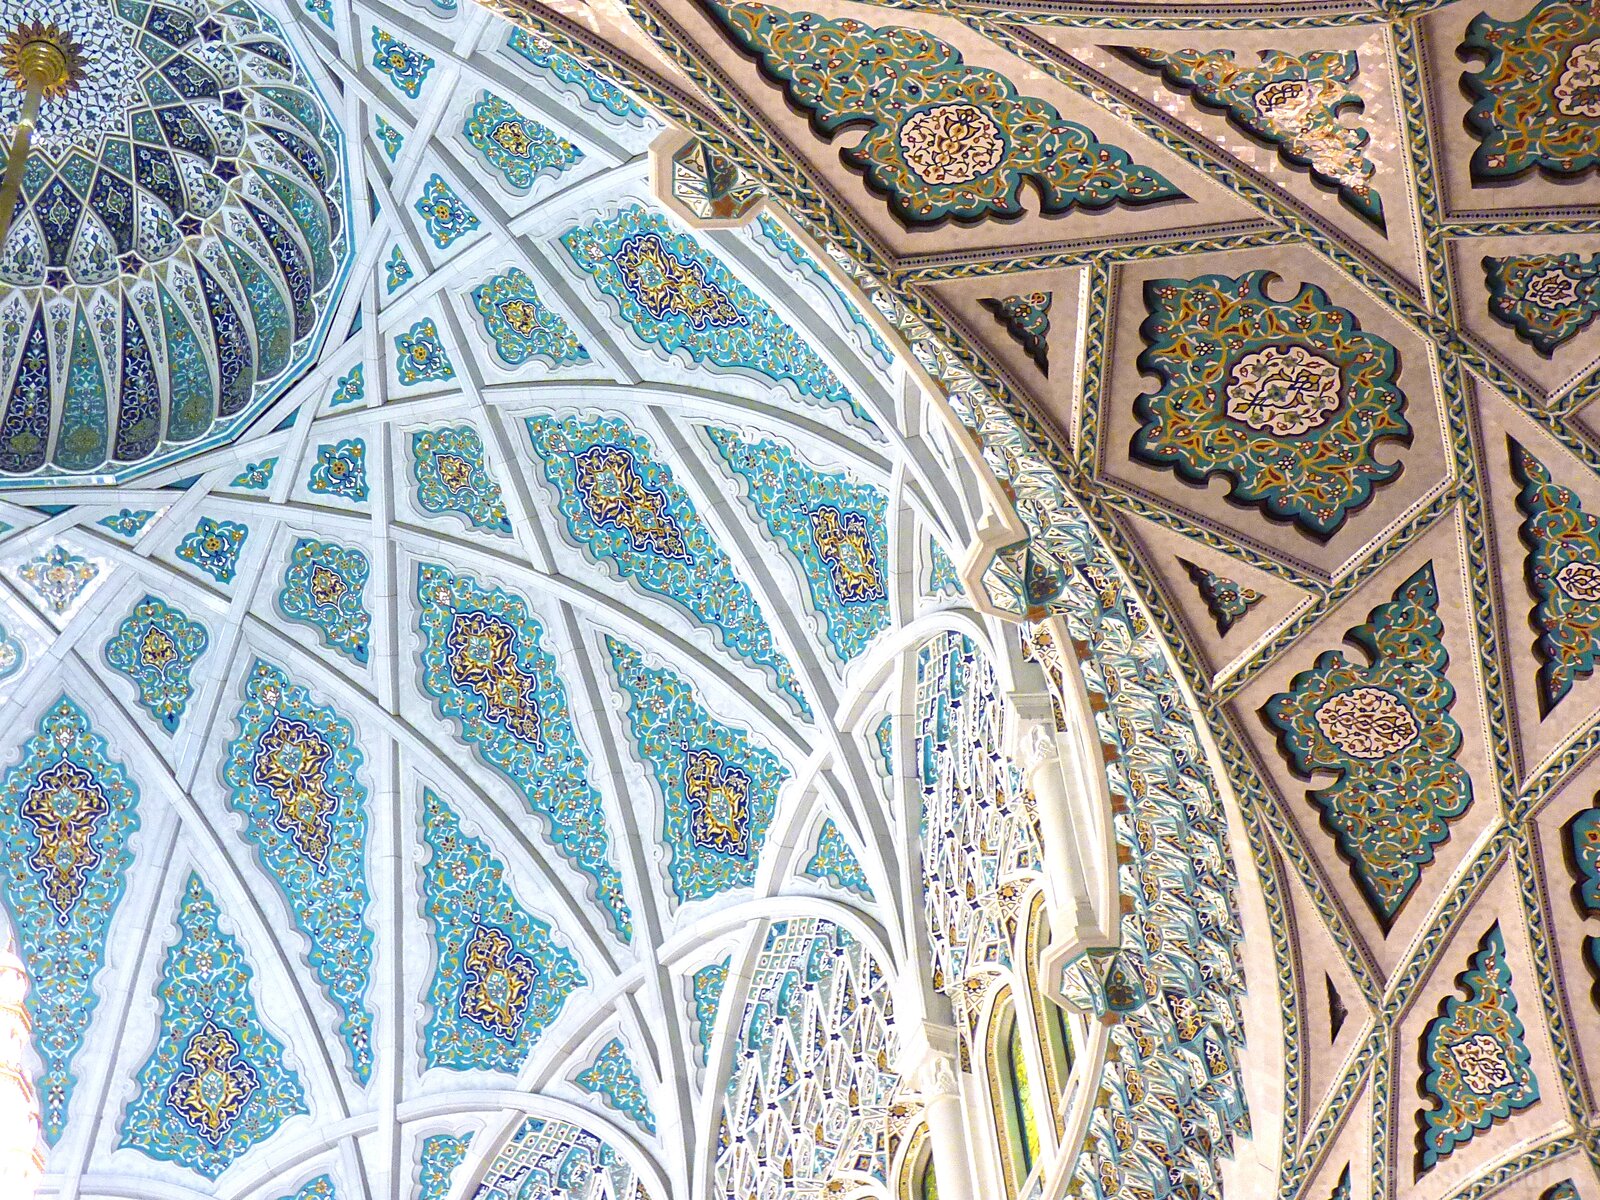 Image of Sultan Qaboos Grand Mosque, Muscat by Alexandra Sharrock